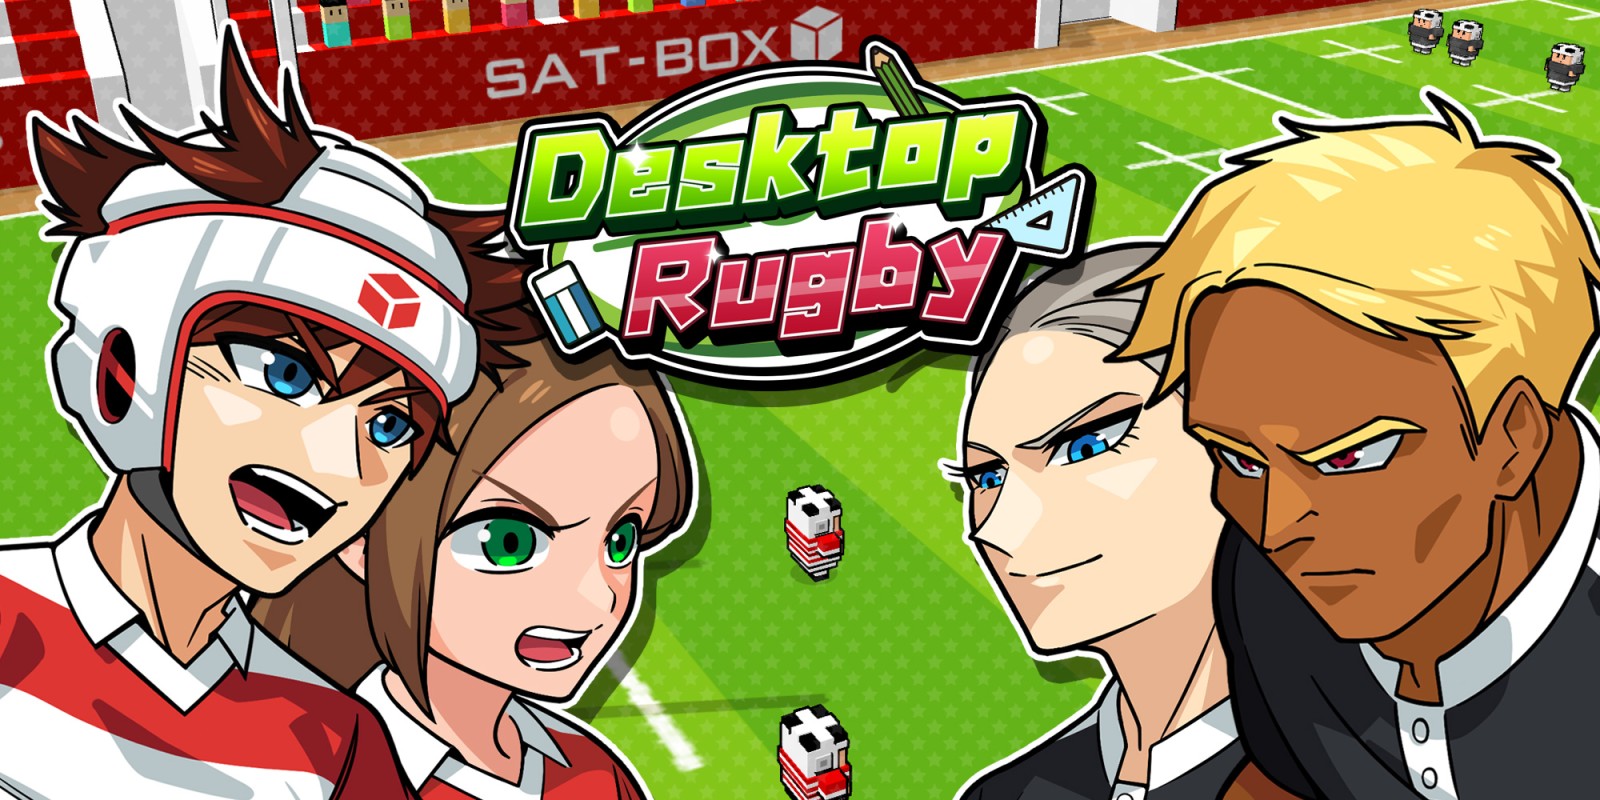 Desktop Rugby